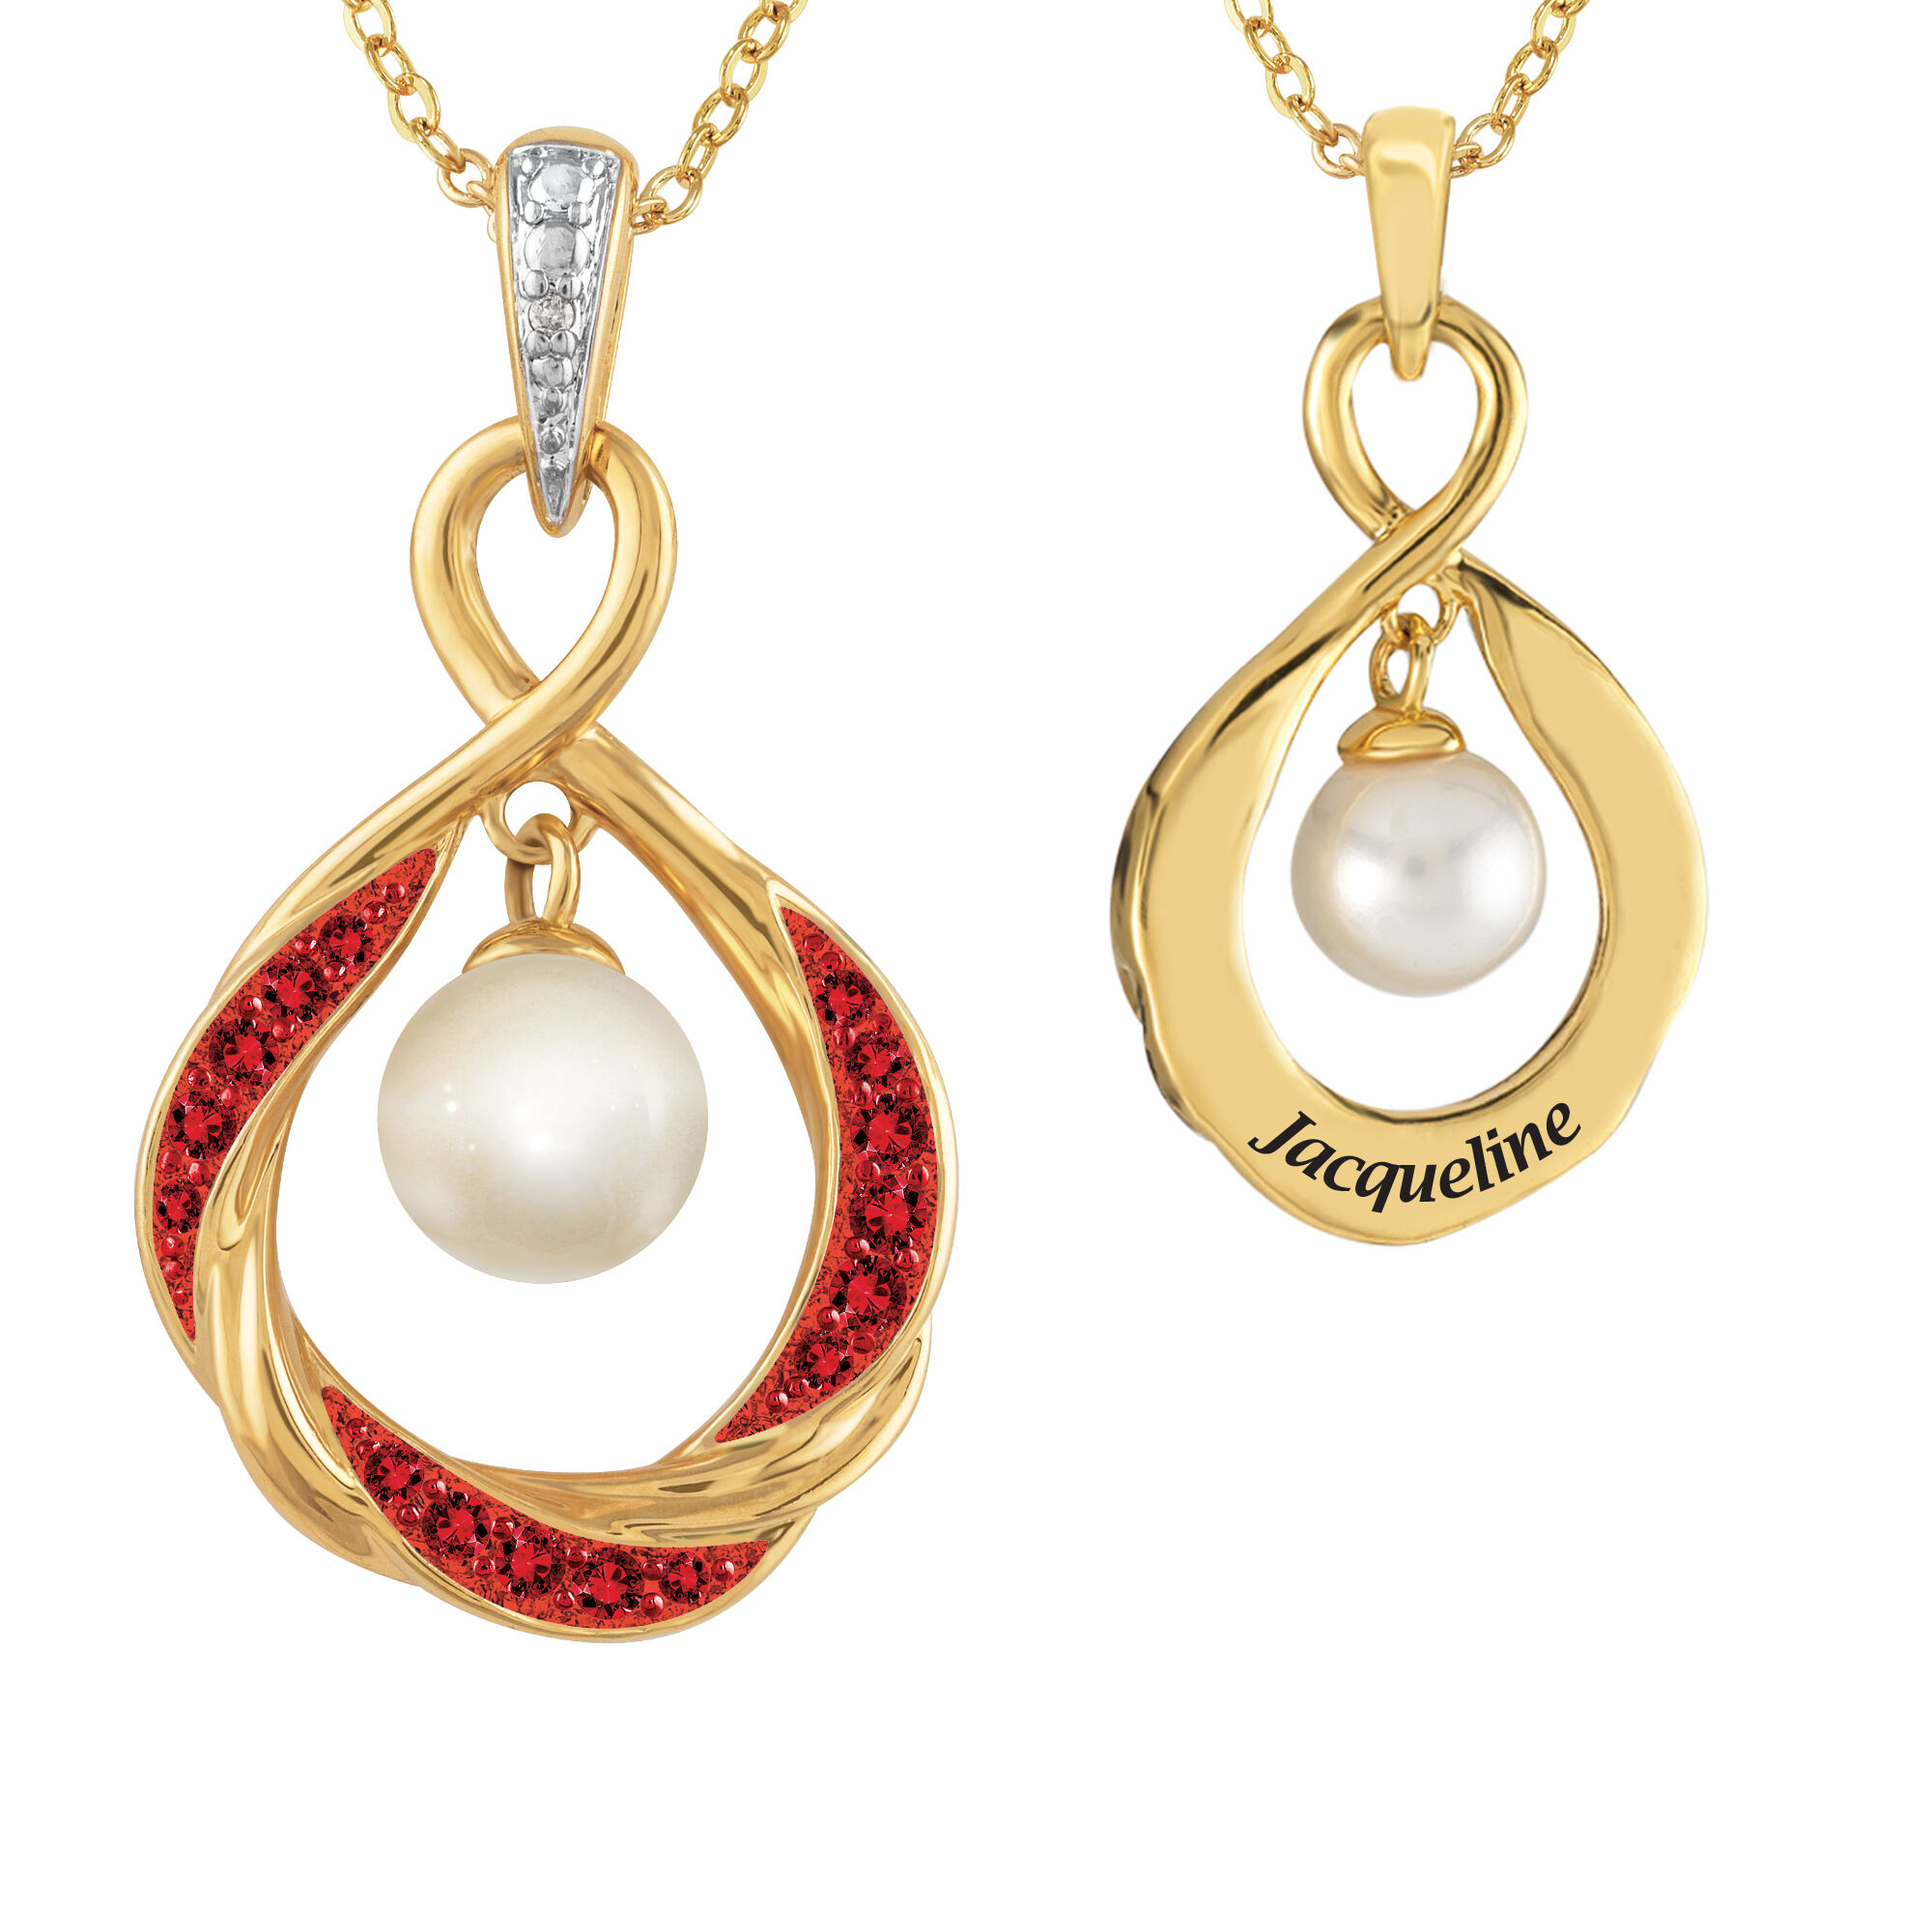 Customised Earrings Bespoke Jewellery Birthstone Gift Large Pearl Earrings Gold with Birthstone Freshwater Pearl and Birthstone Earrings